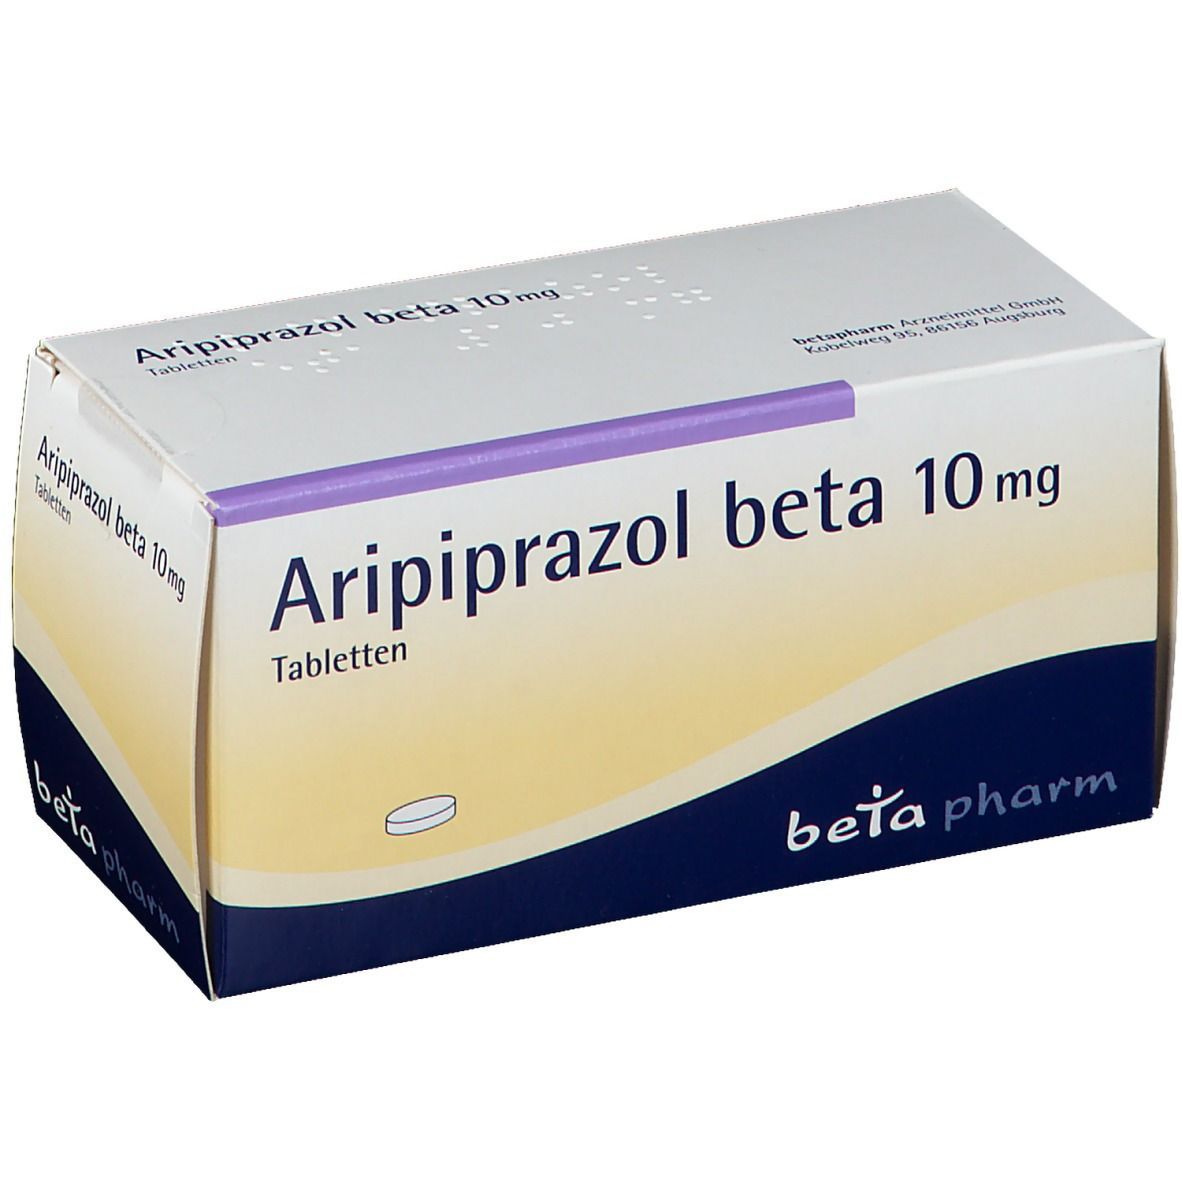 Aripiprazol beta 10 mg